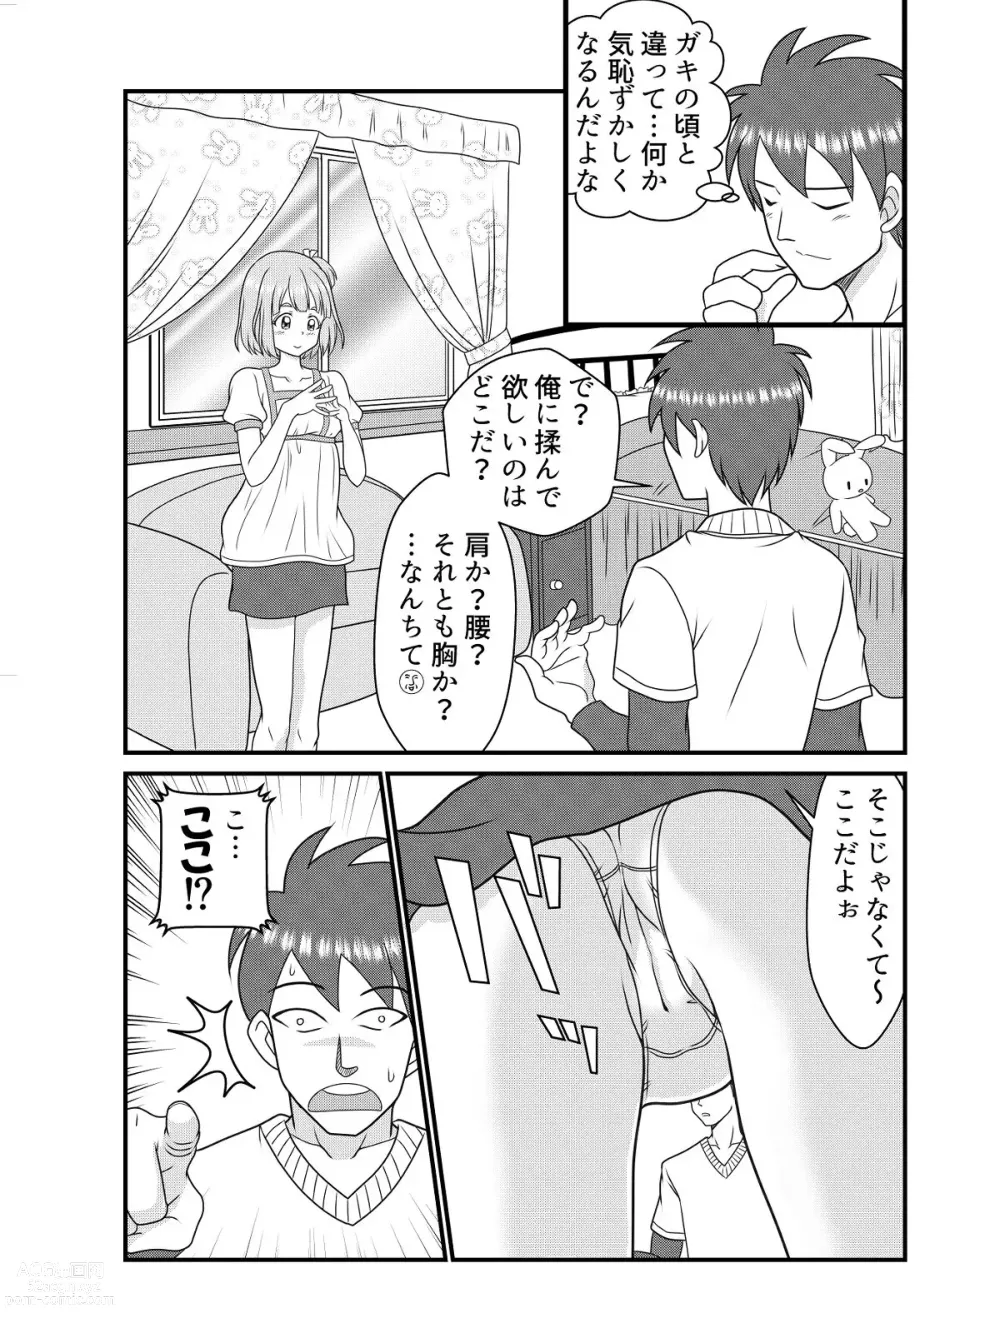 Page 4 of doujinshi Pen Saki no Koibito